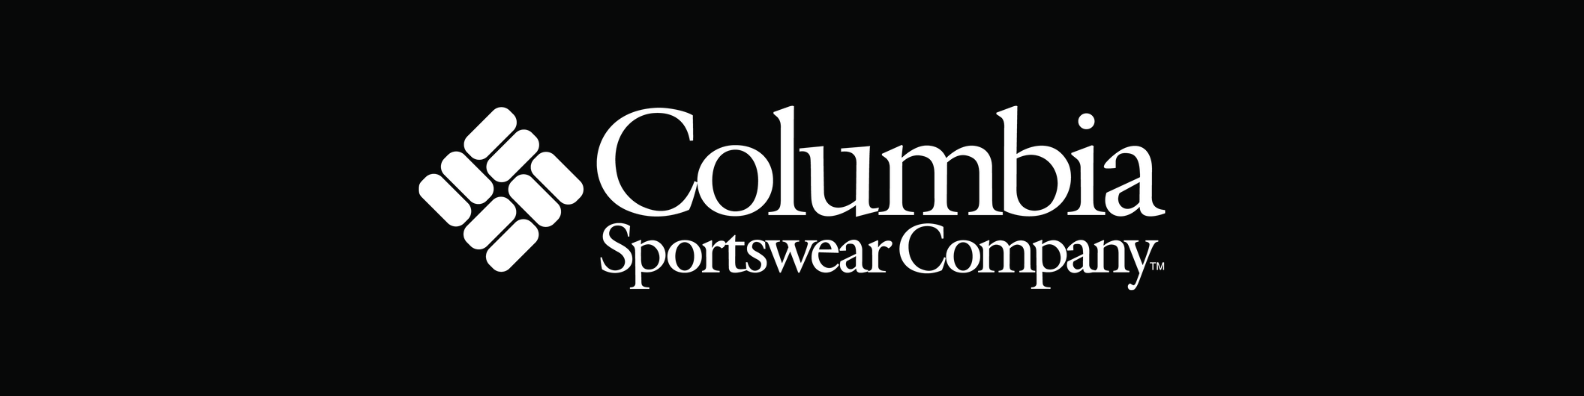 Columbia Sportswear Company: Culture